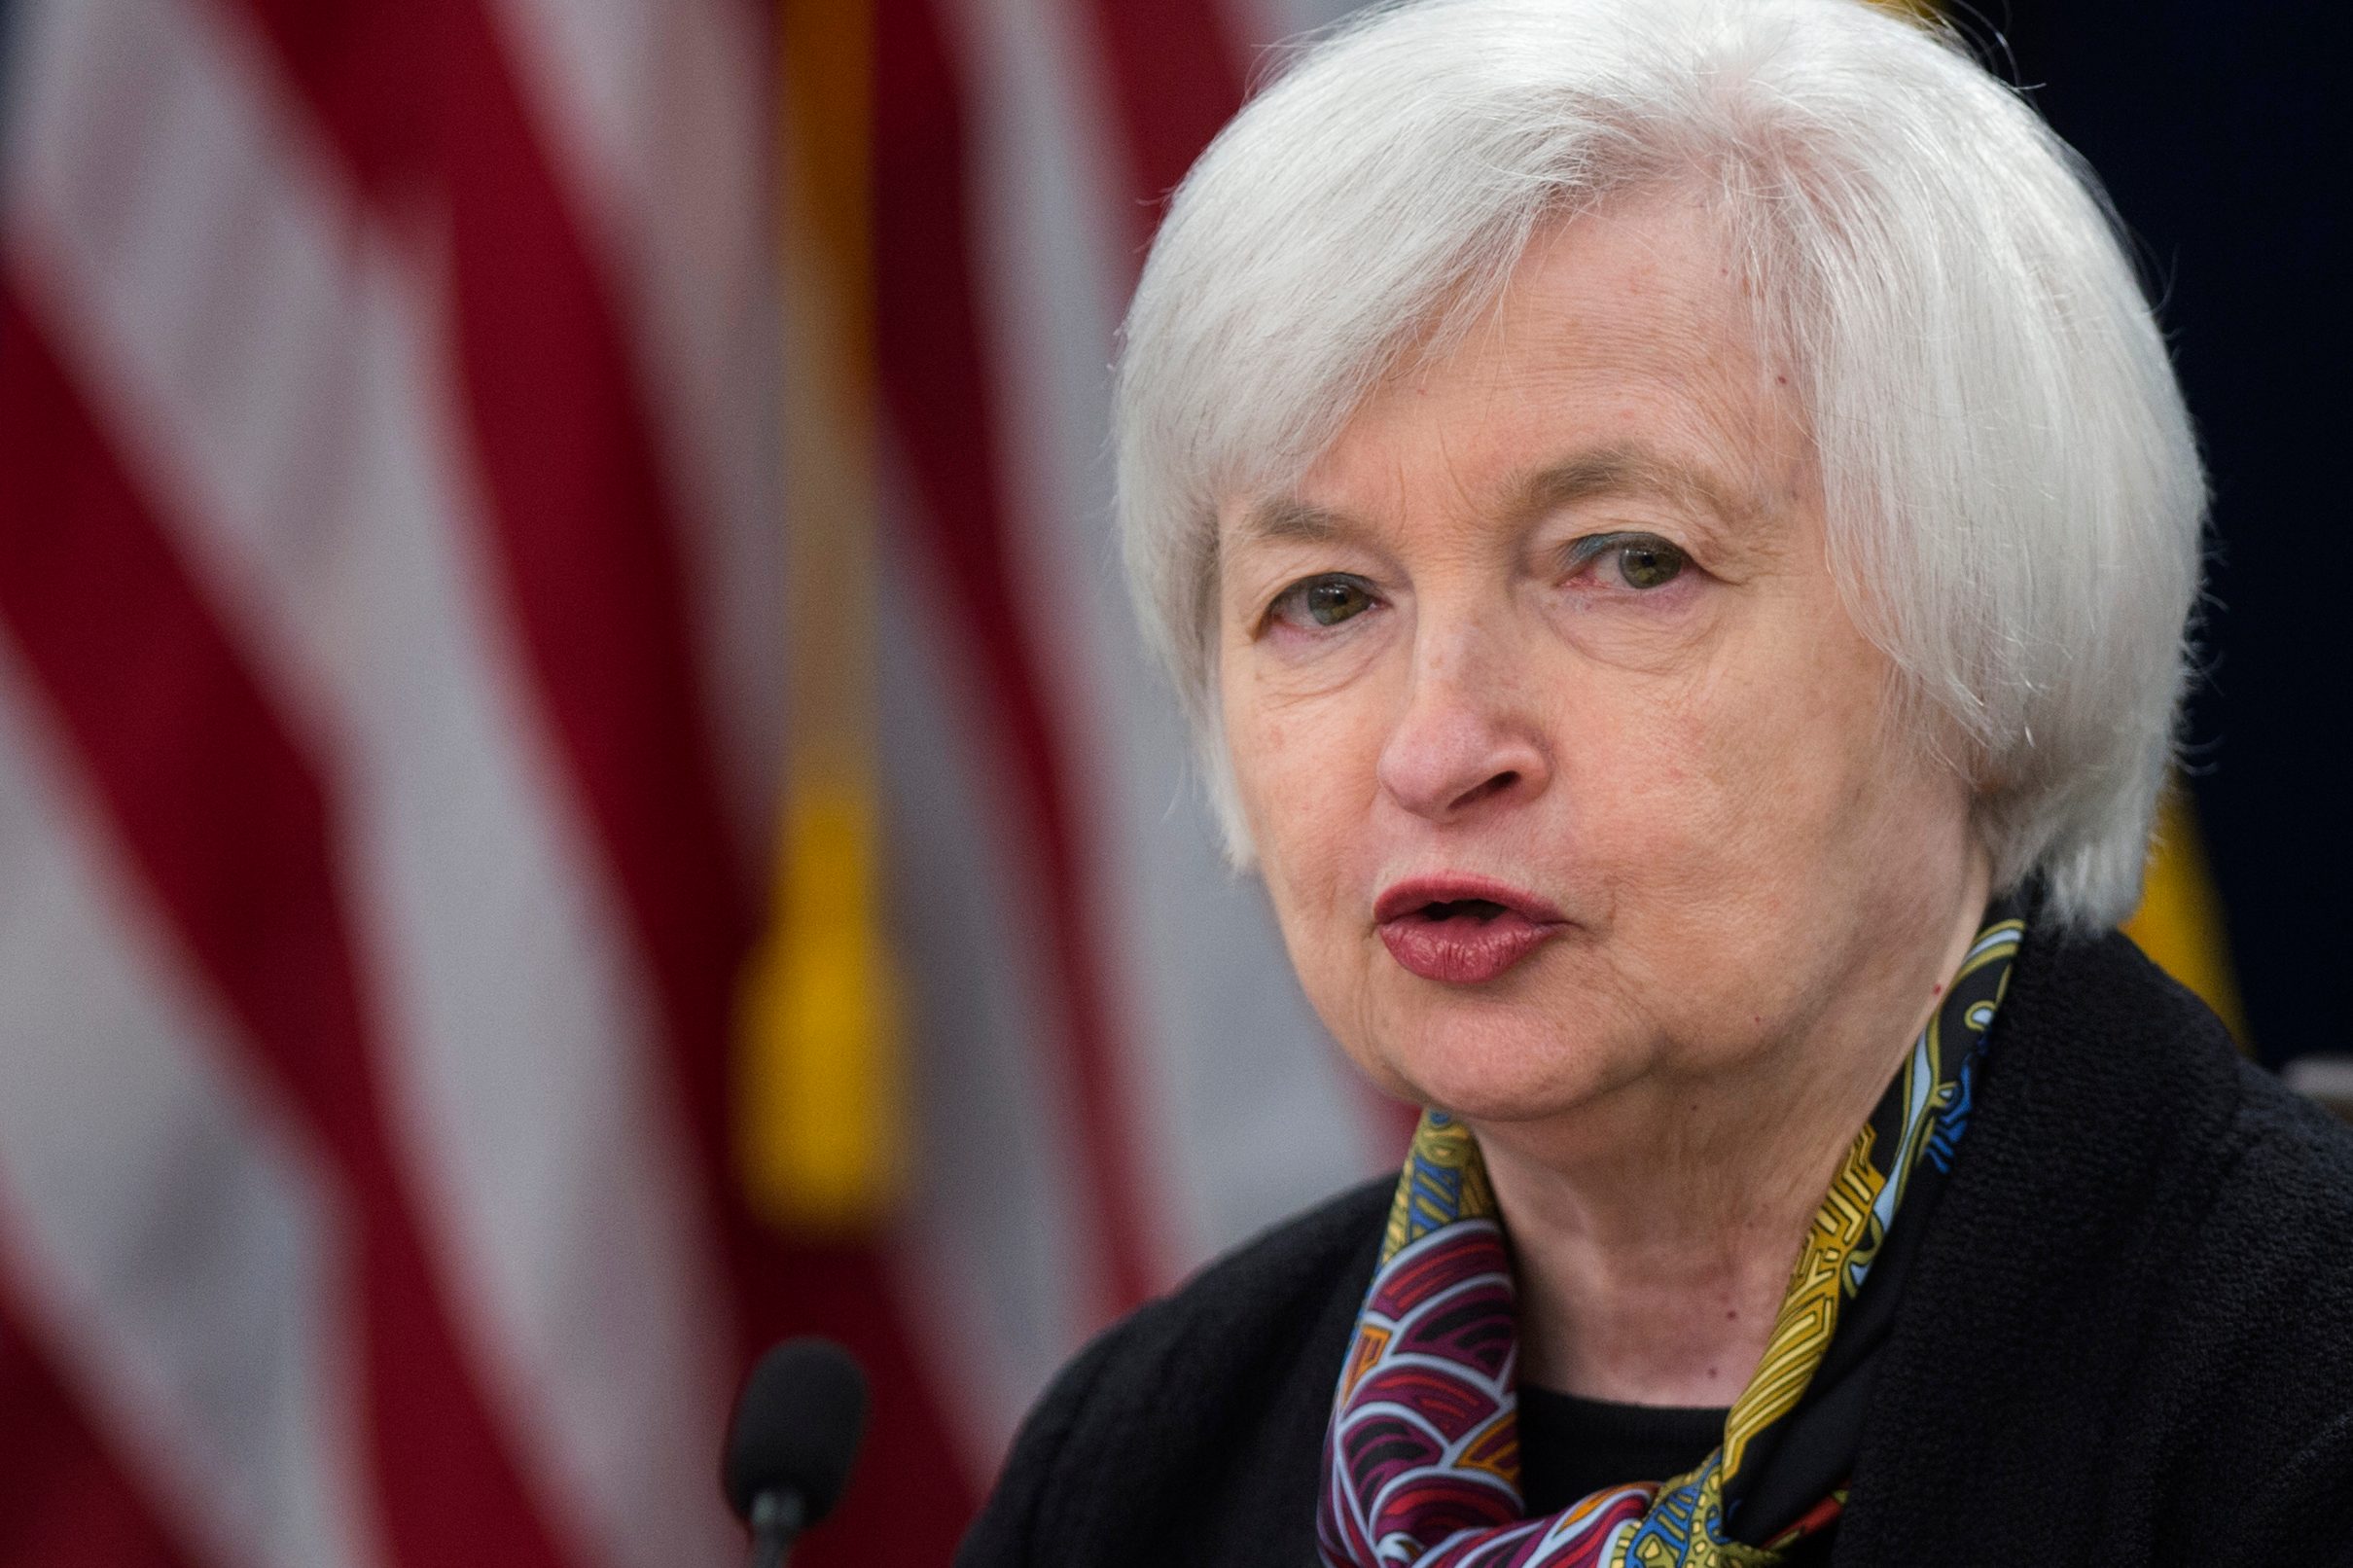 Feeling global slowdown, Fed keeps interest rate unchanged